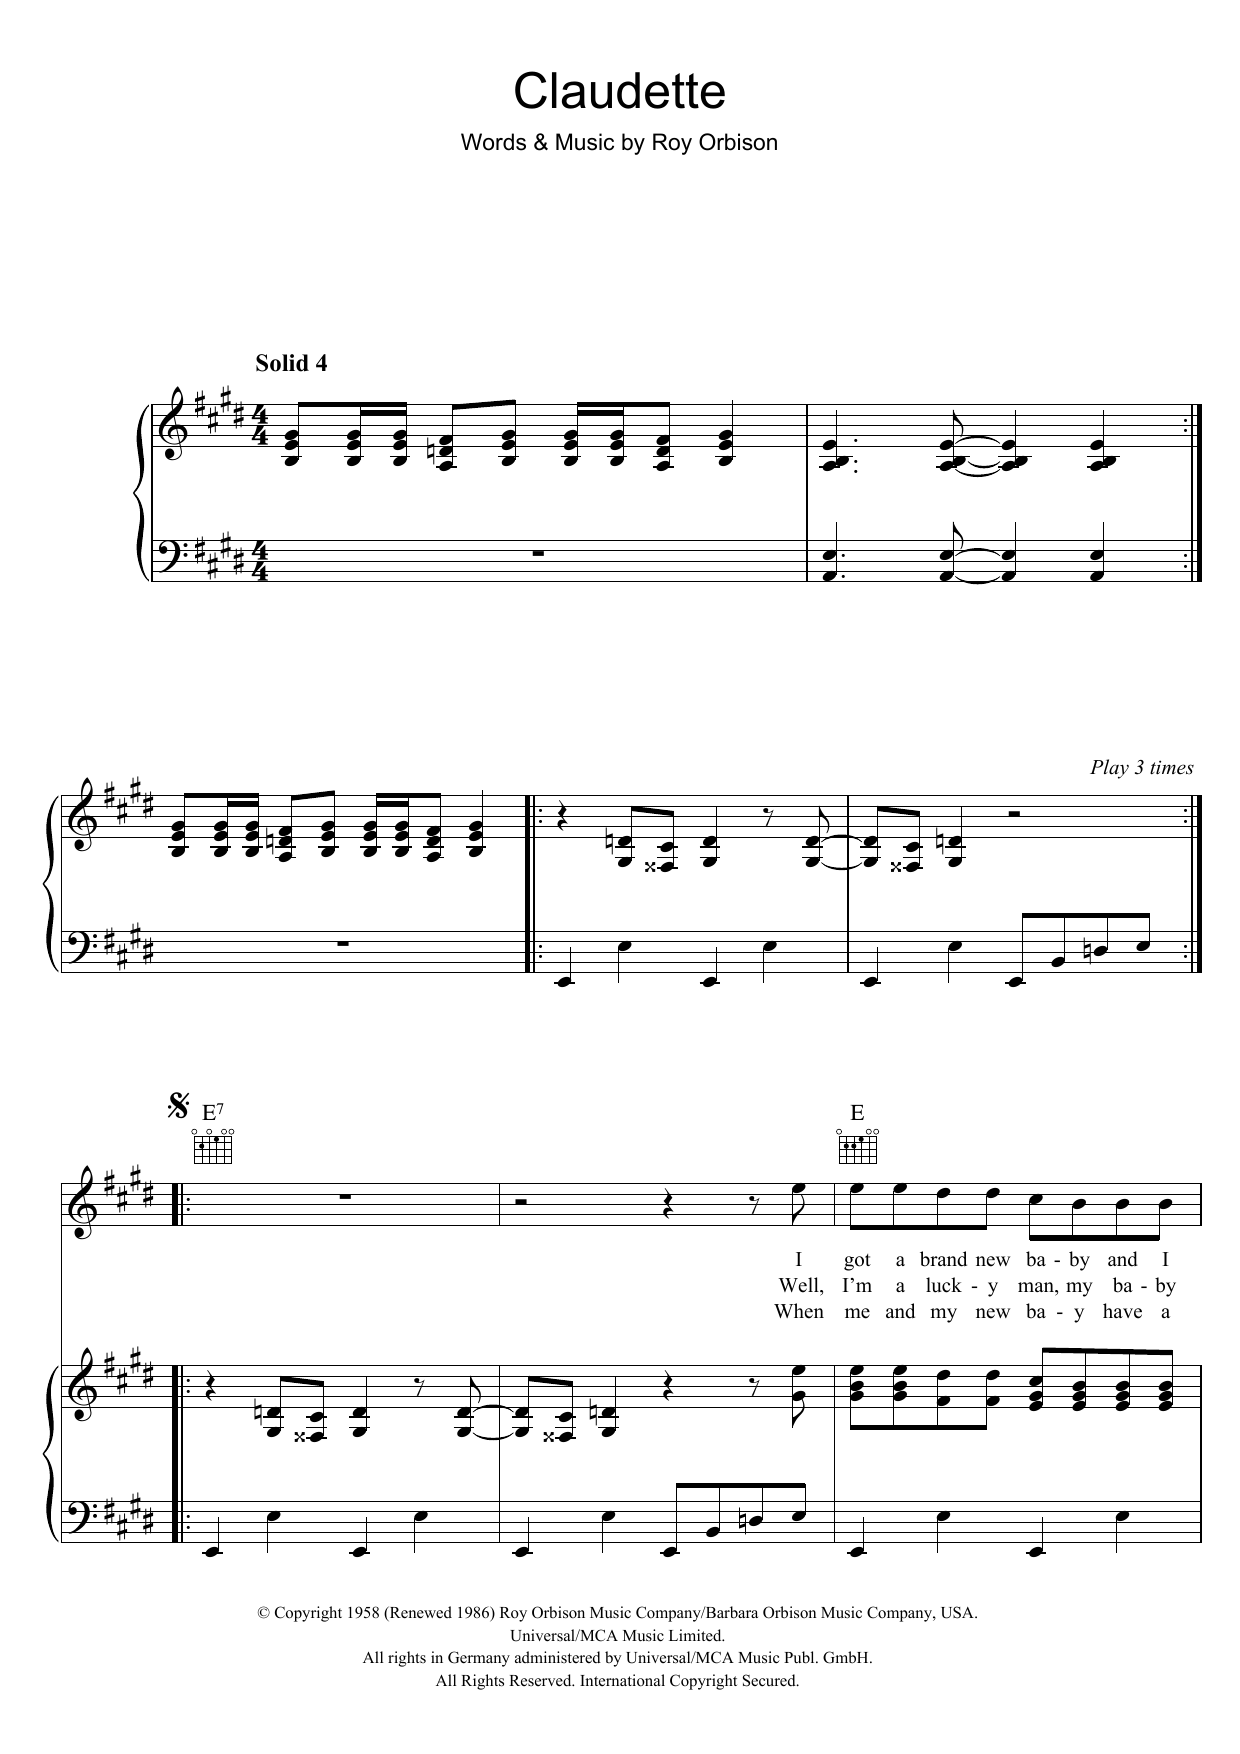 Roy Orbison Claudette Sheet Music Notes & Chords for Guitar Tab - Download or Print PDF